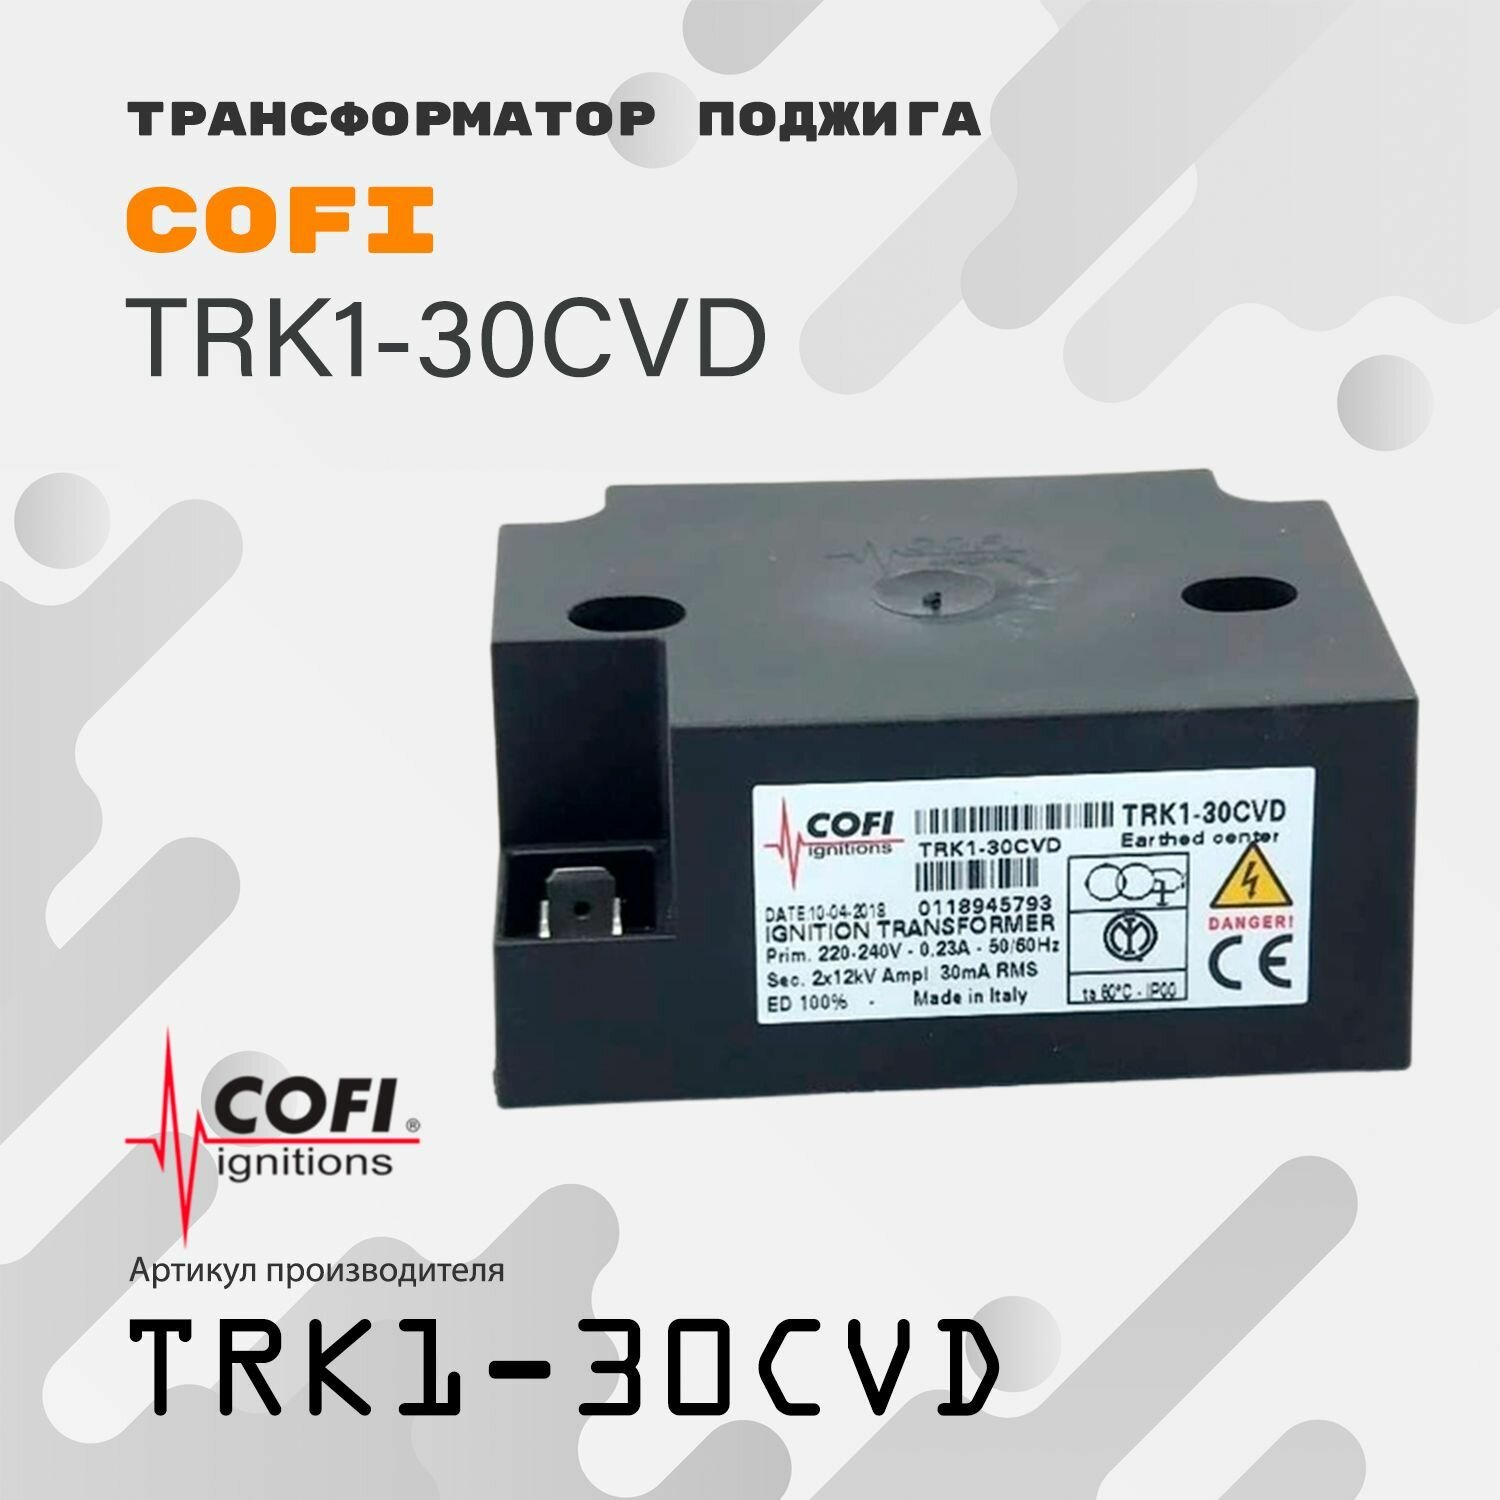 Трансформатор поджига Cofi TRK1-30CVD